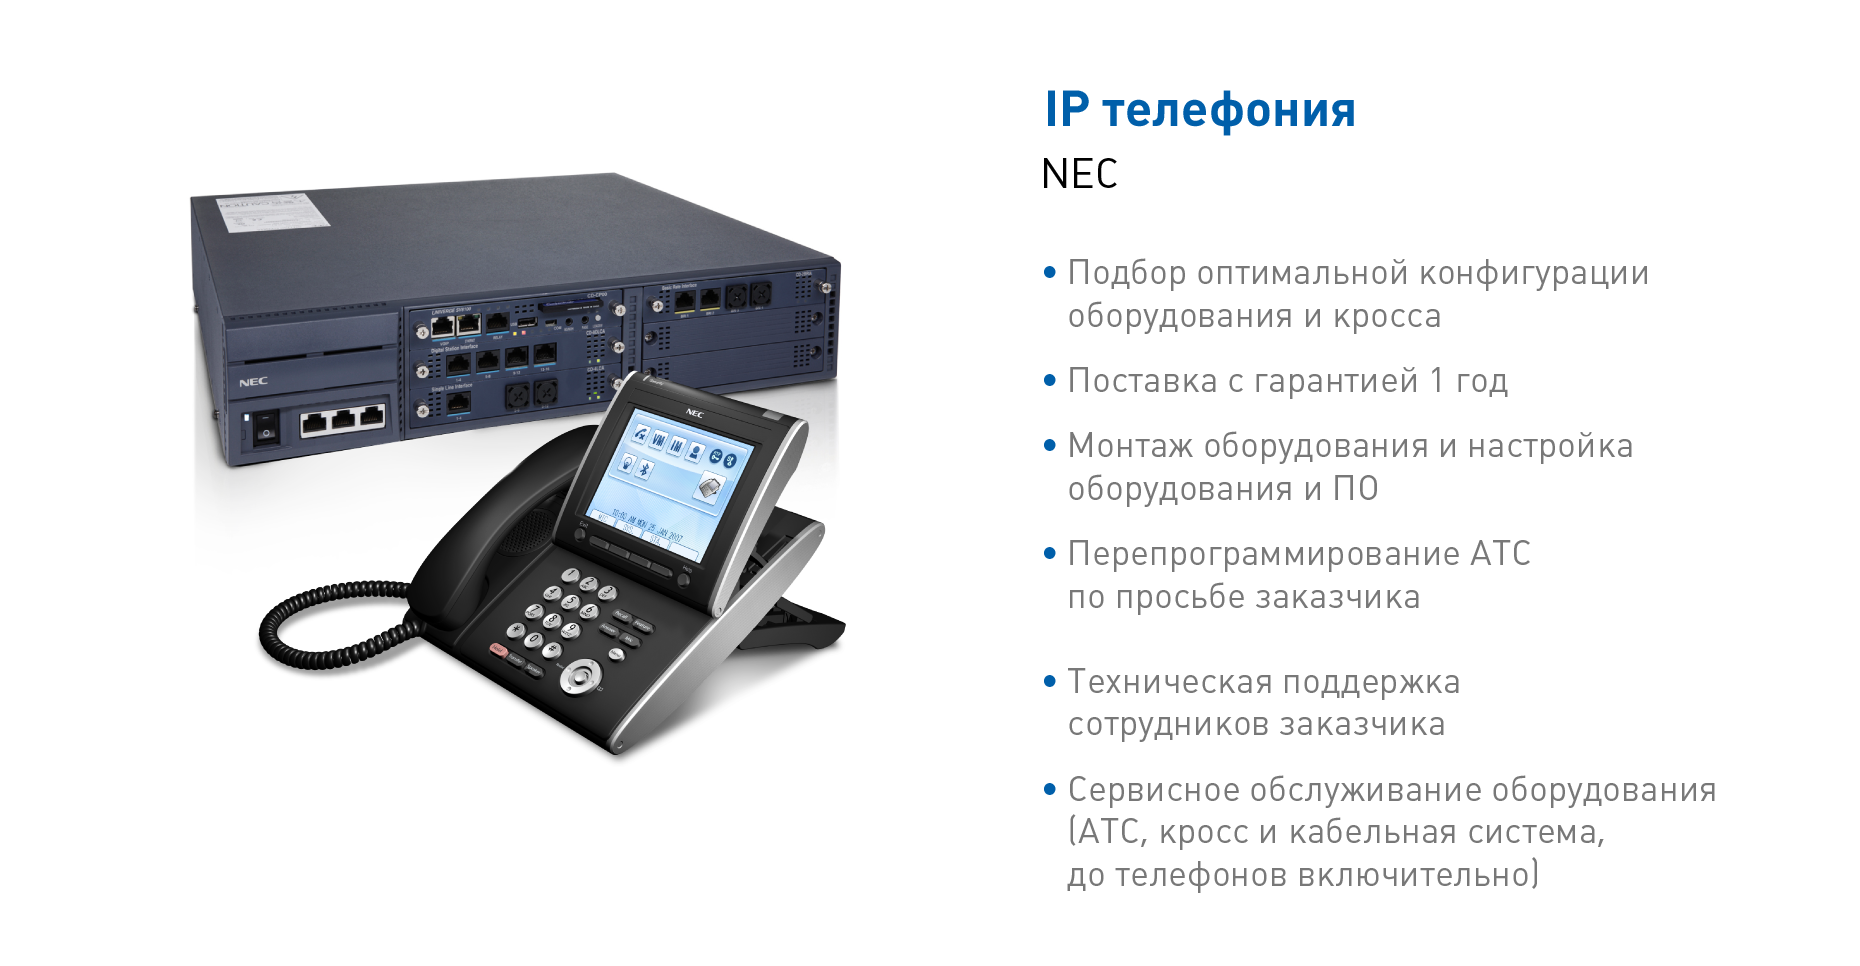 АТС и IP телефония NEC